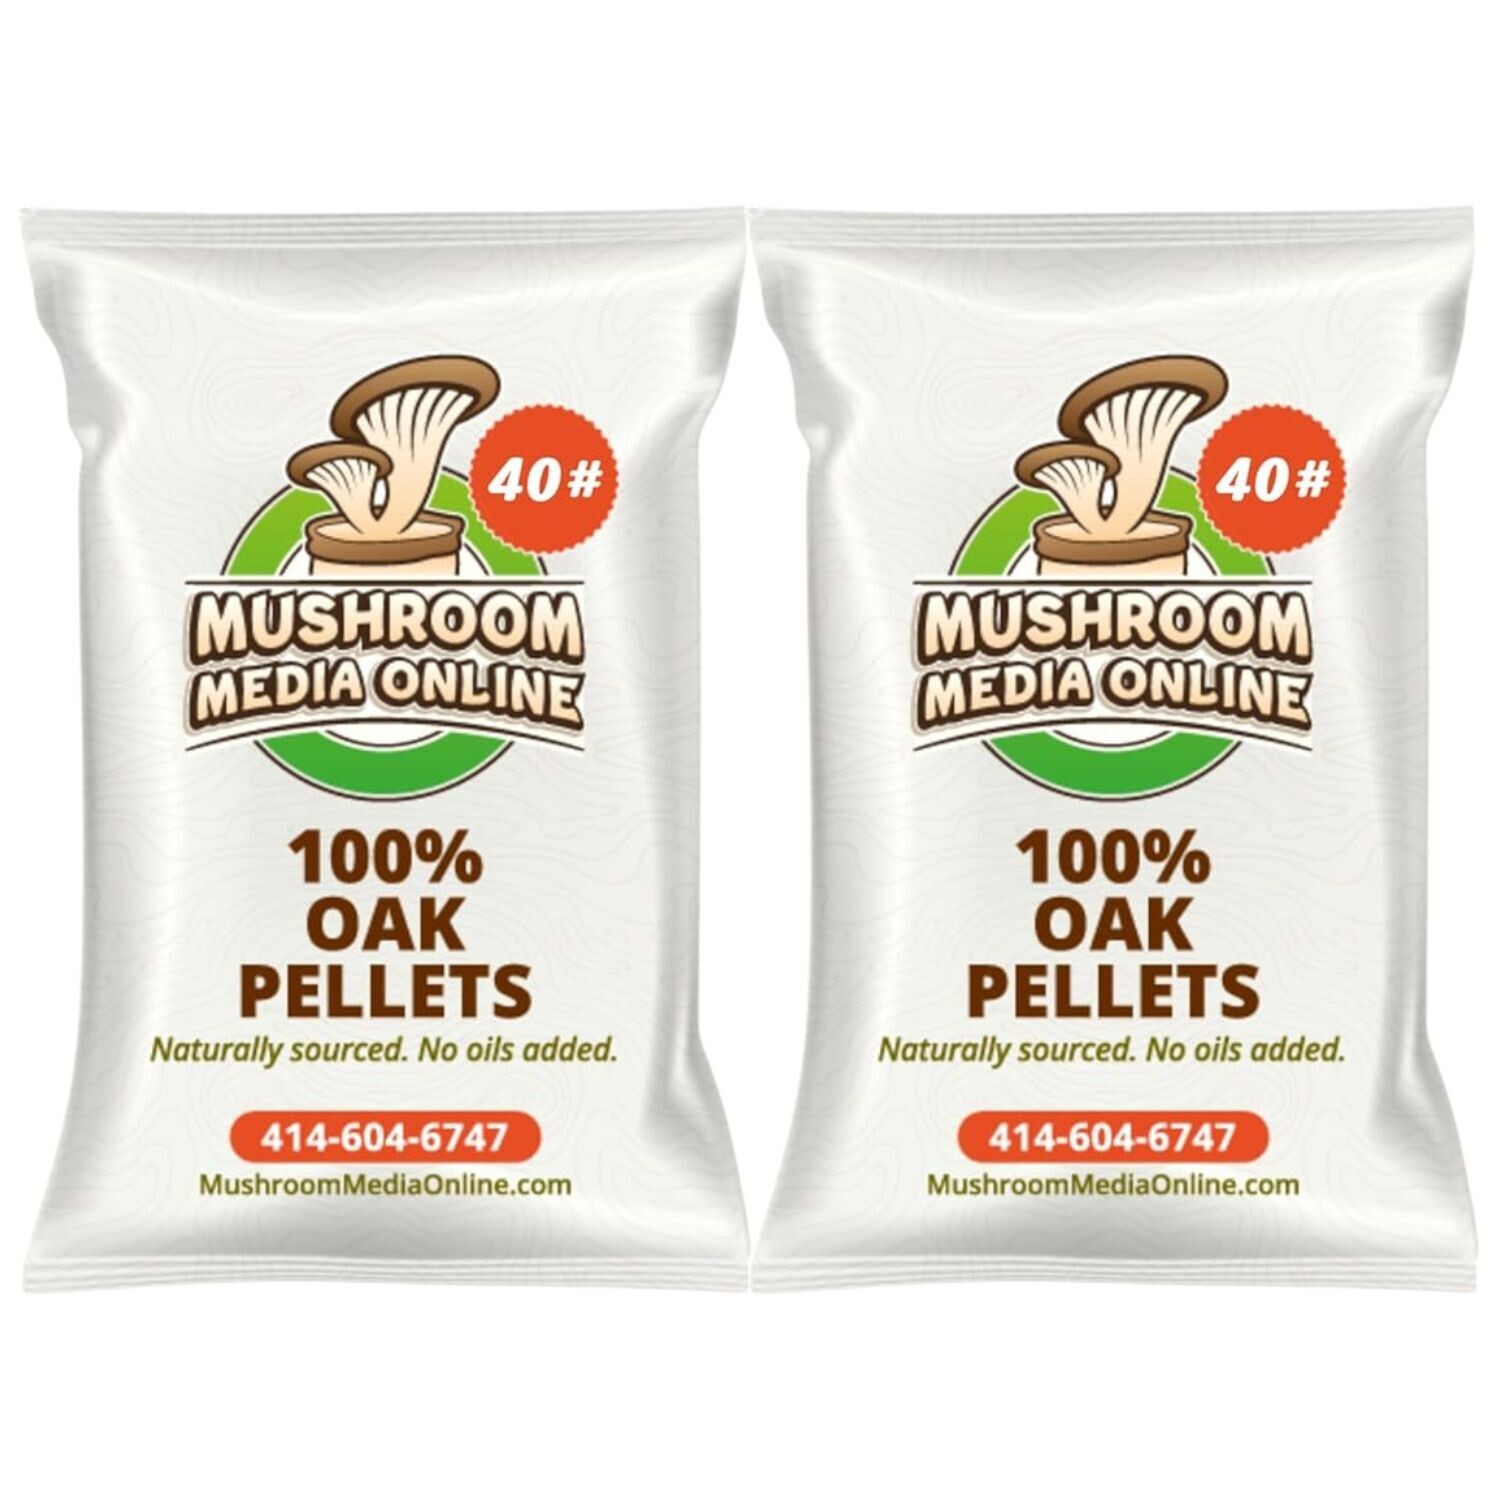 80# 100% Oak Mushroom Pellets - Free shipping